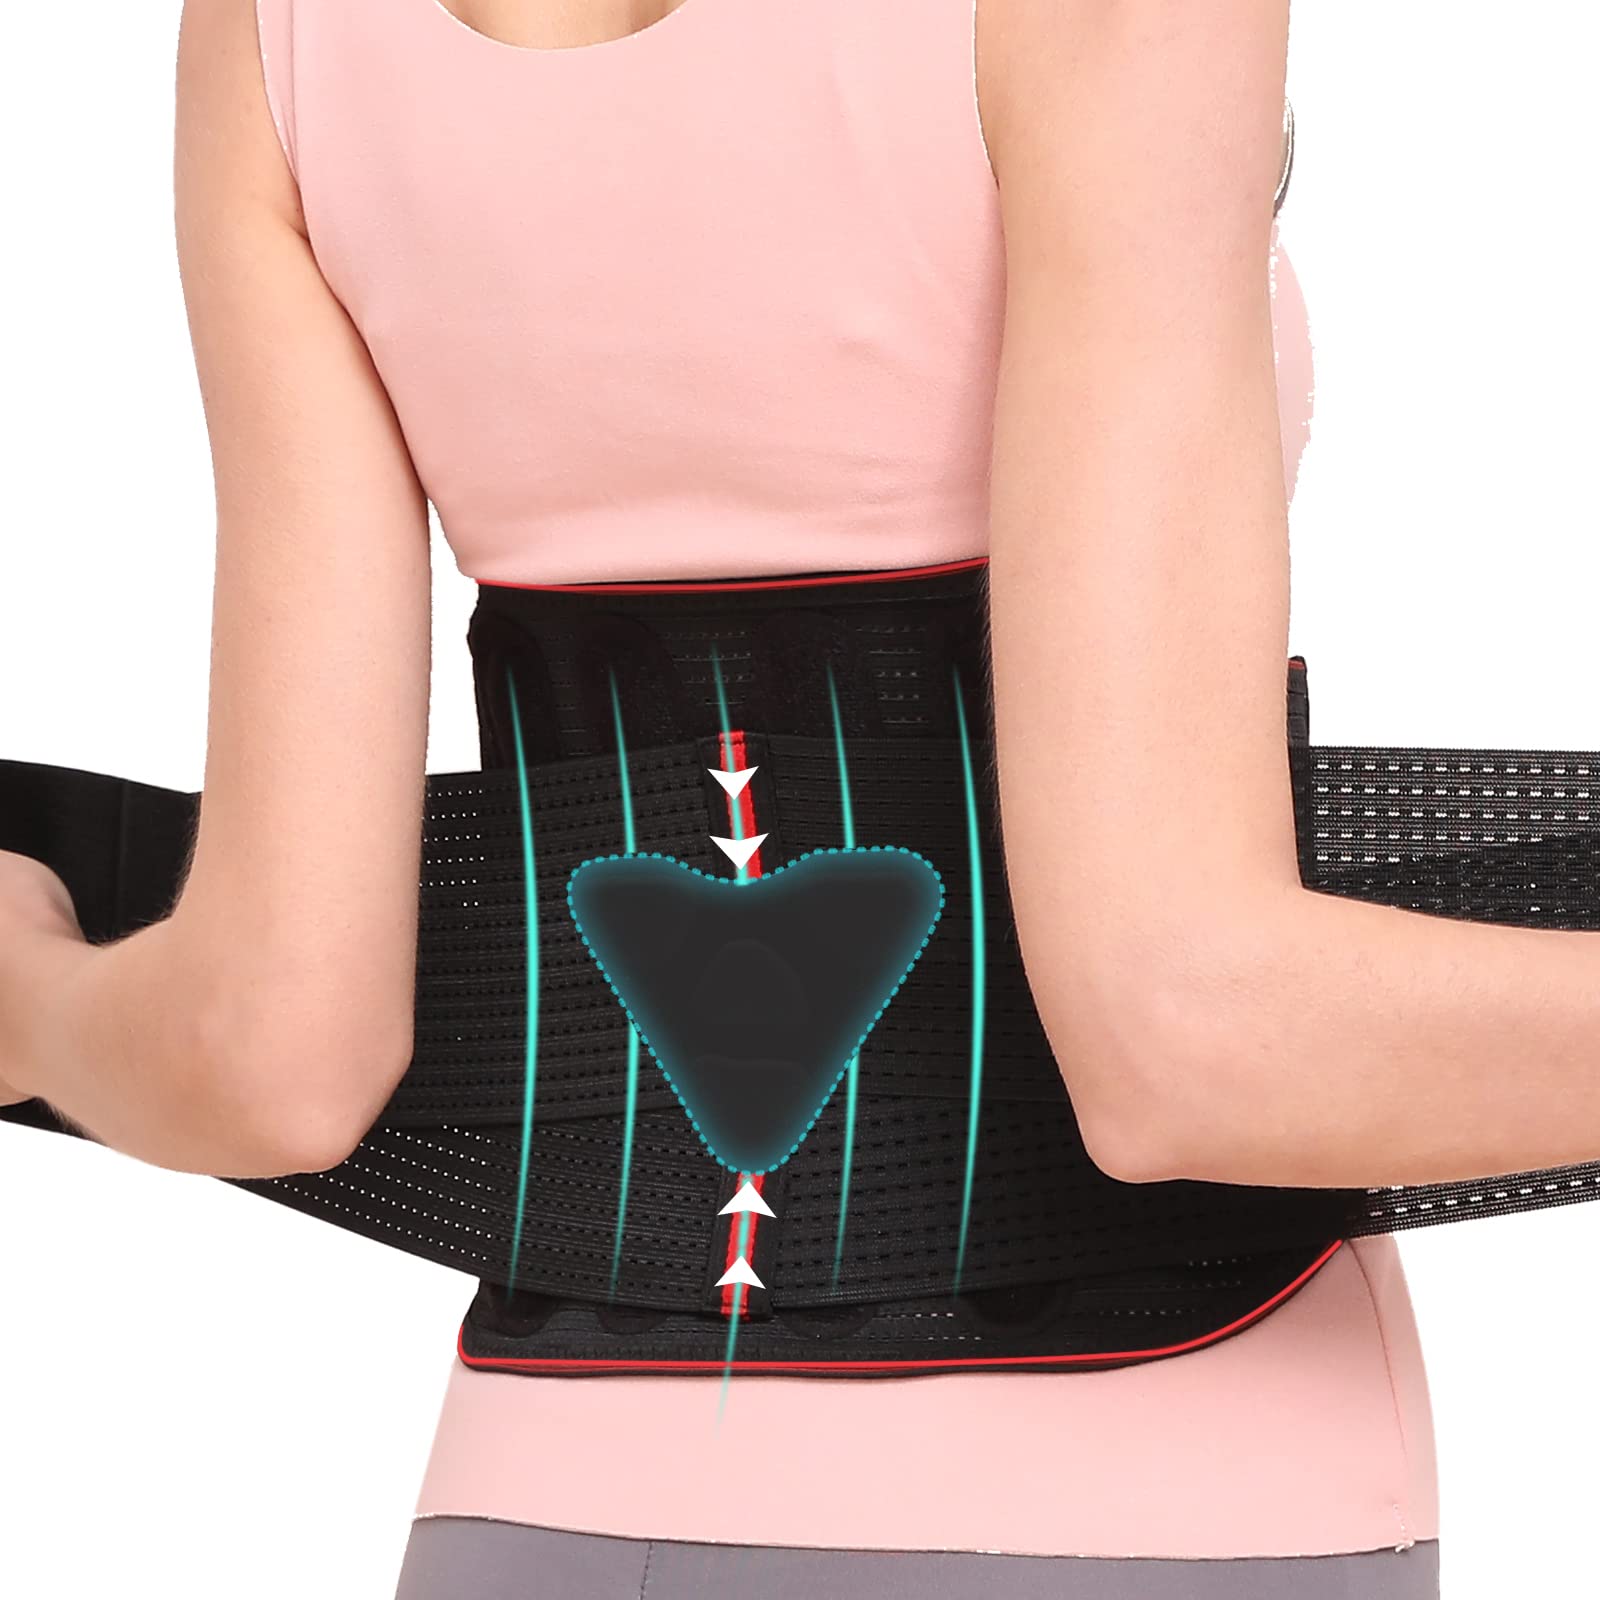 Back Brace For Lower Back Pain Relief,breathable Adjustable Back